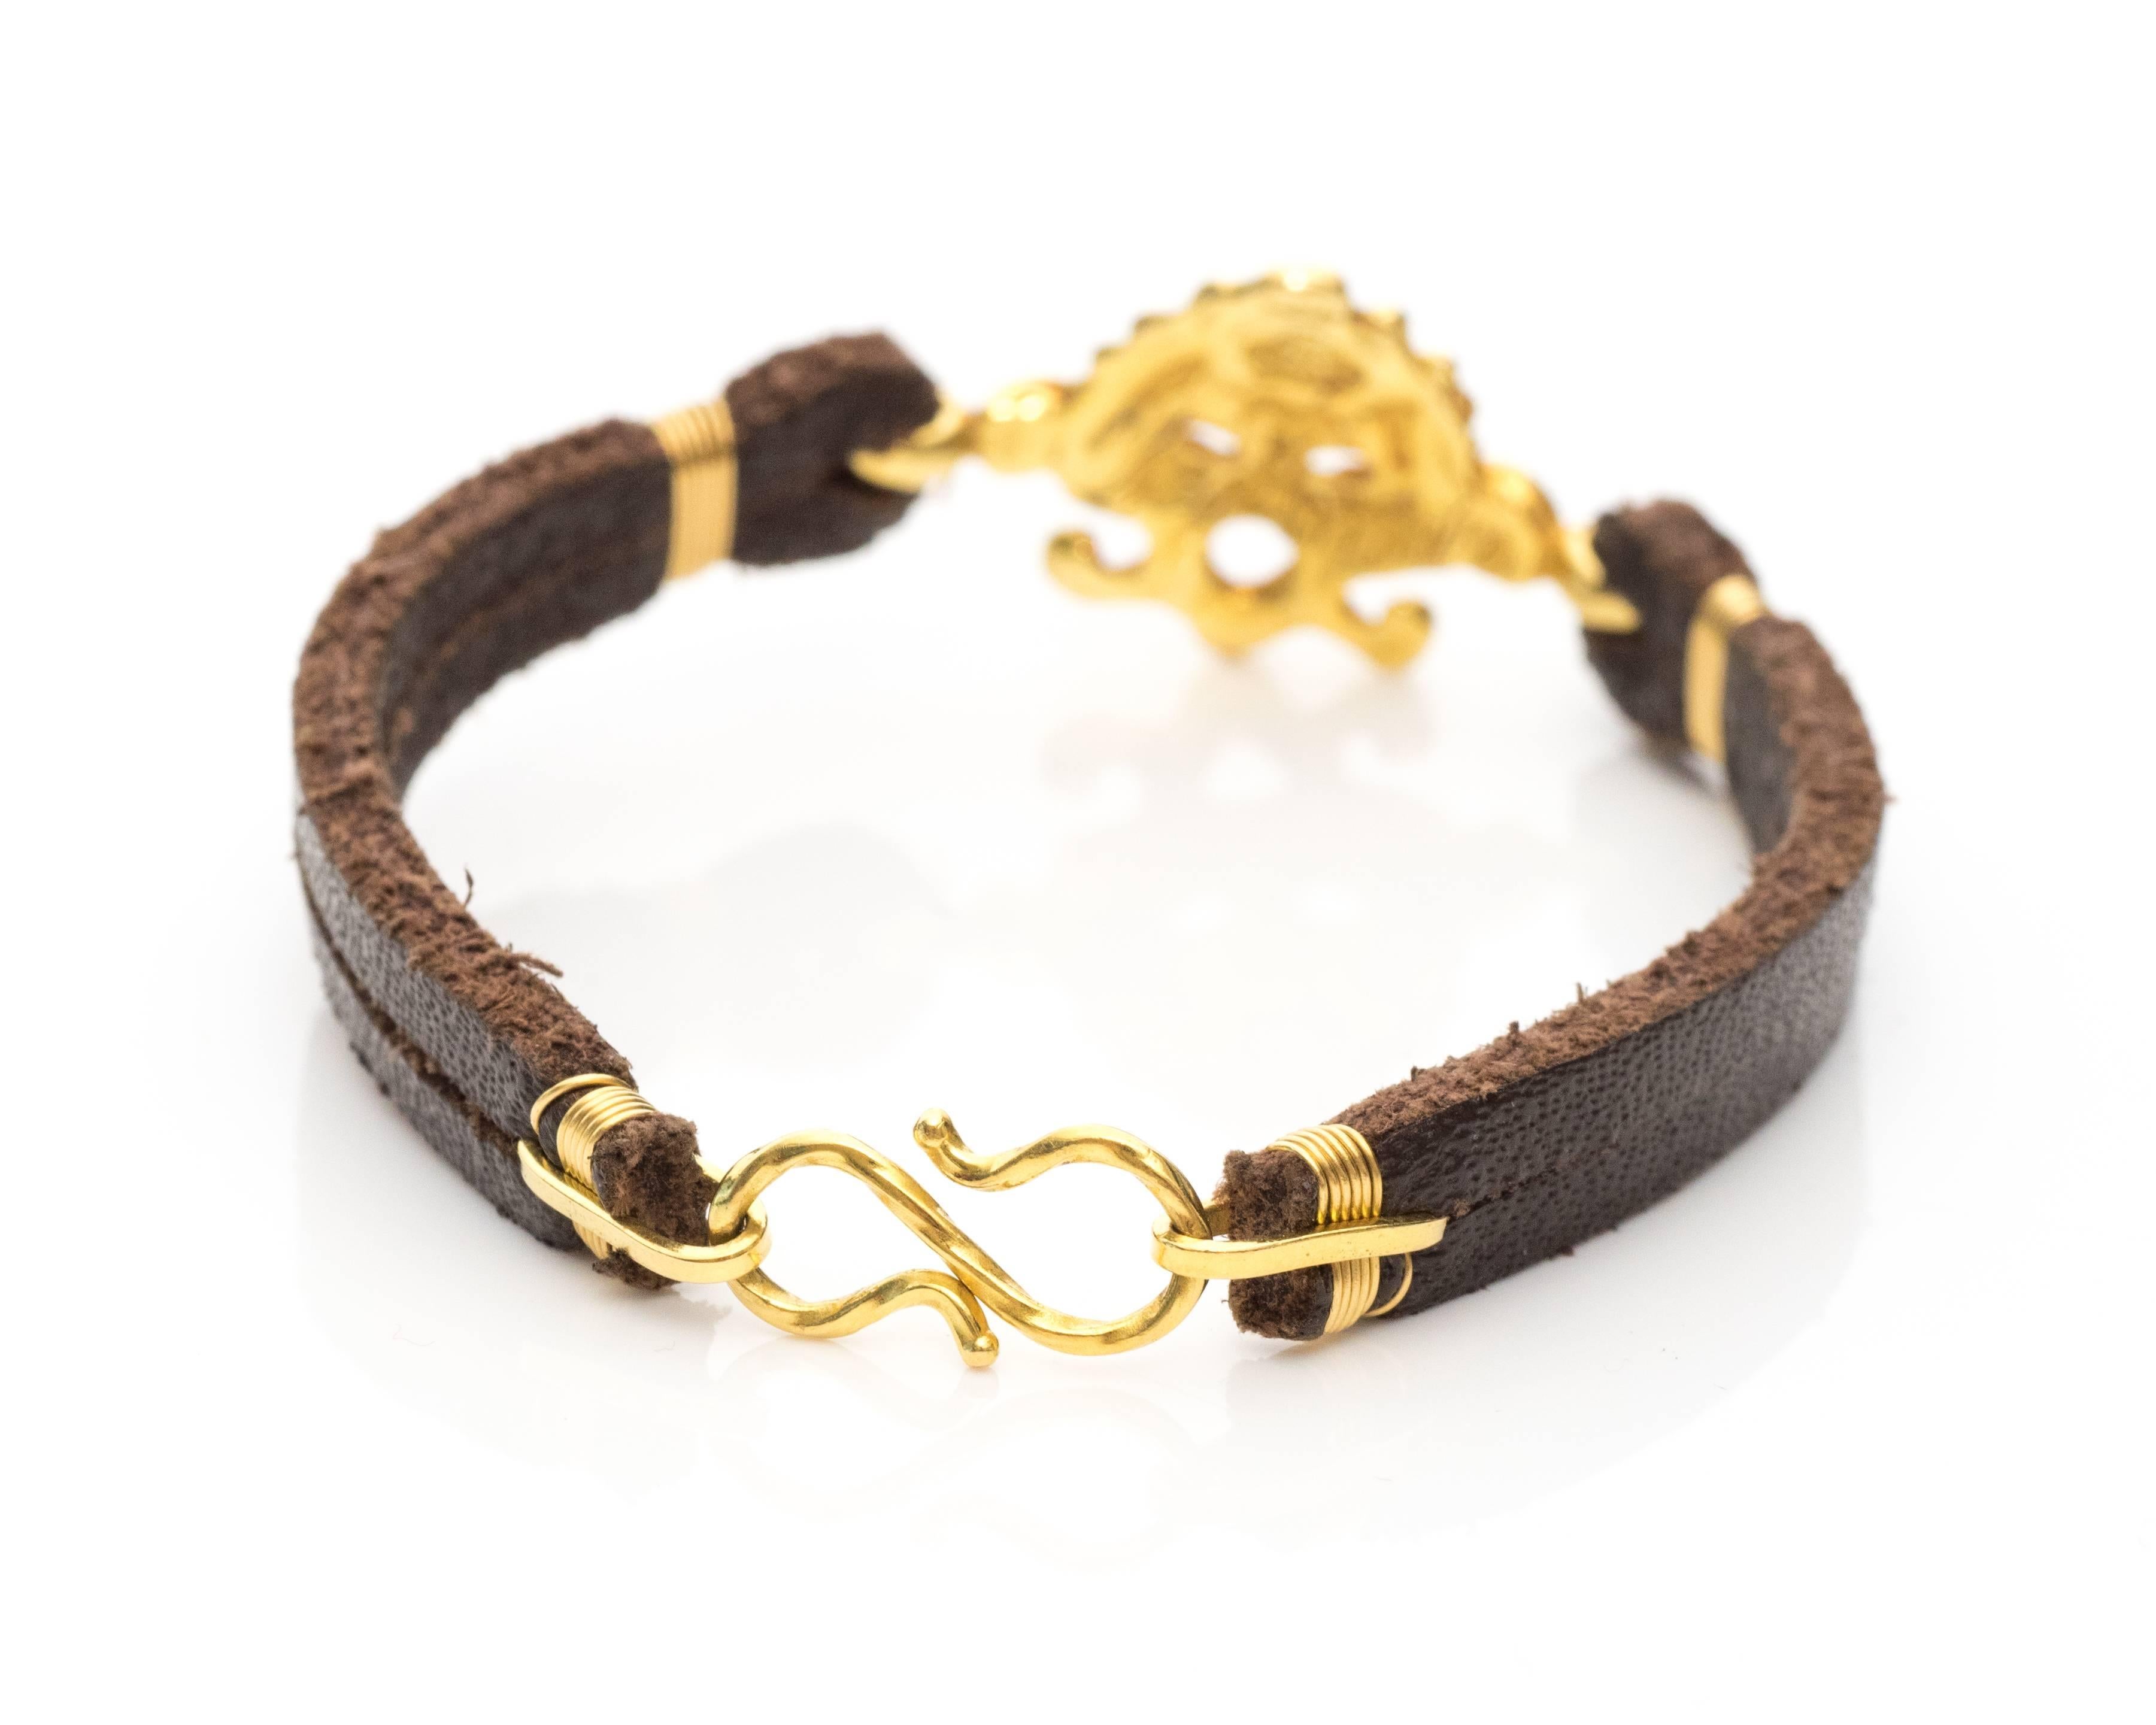 Women's 1980s 22 Karat Yellow Gold and Leather Handmade Bracelet